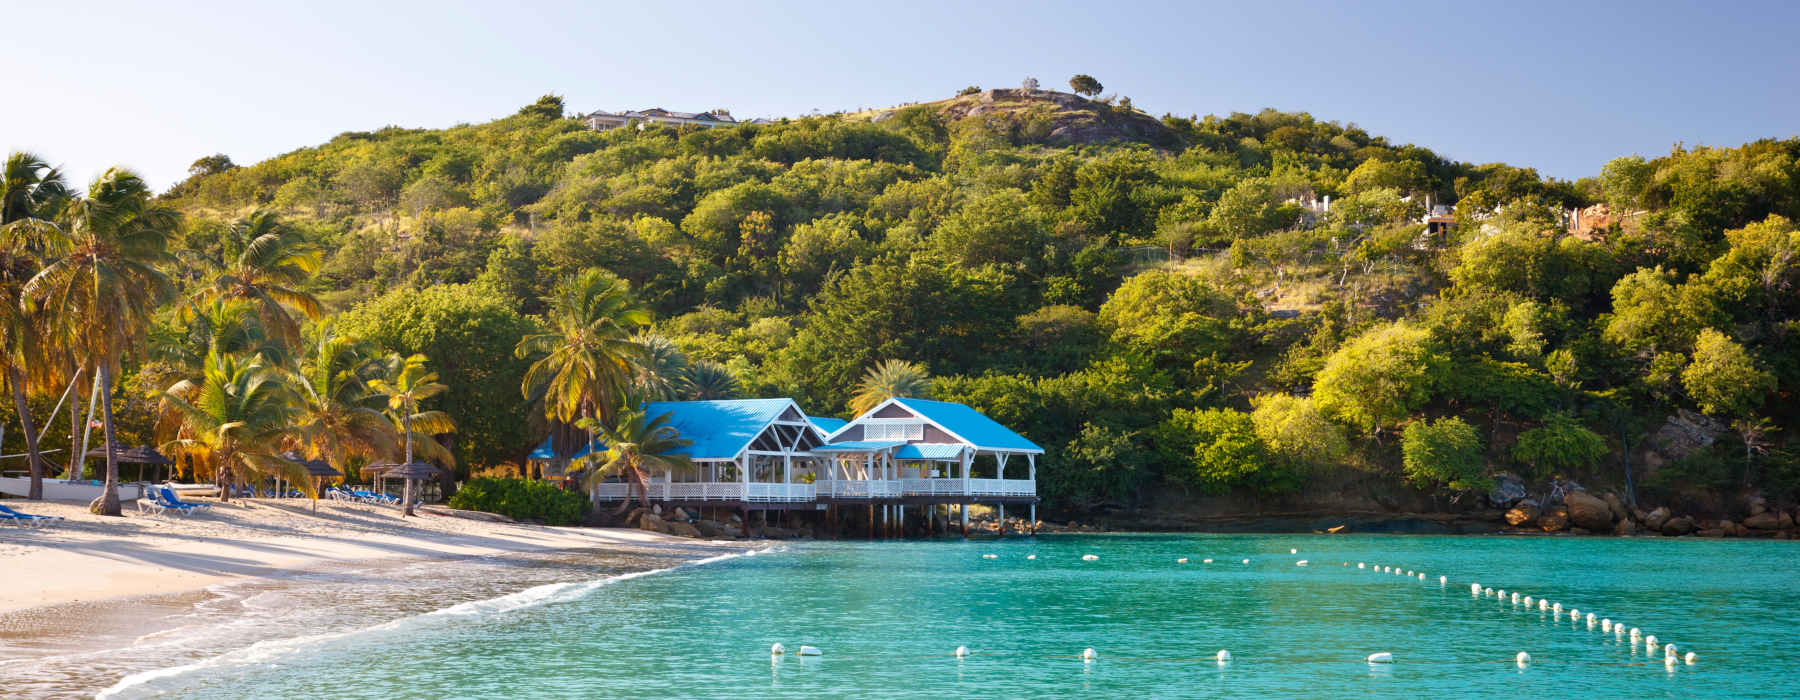 Antigua and Barbuda<br class="hidden-md hidden-lg" /> Family Holidays